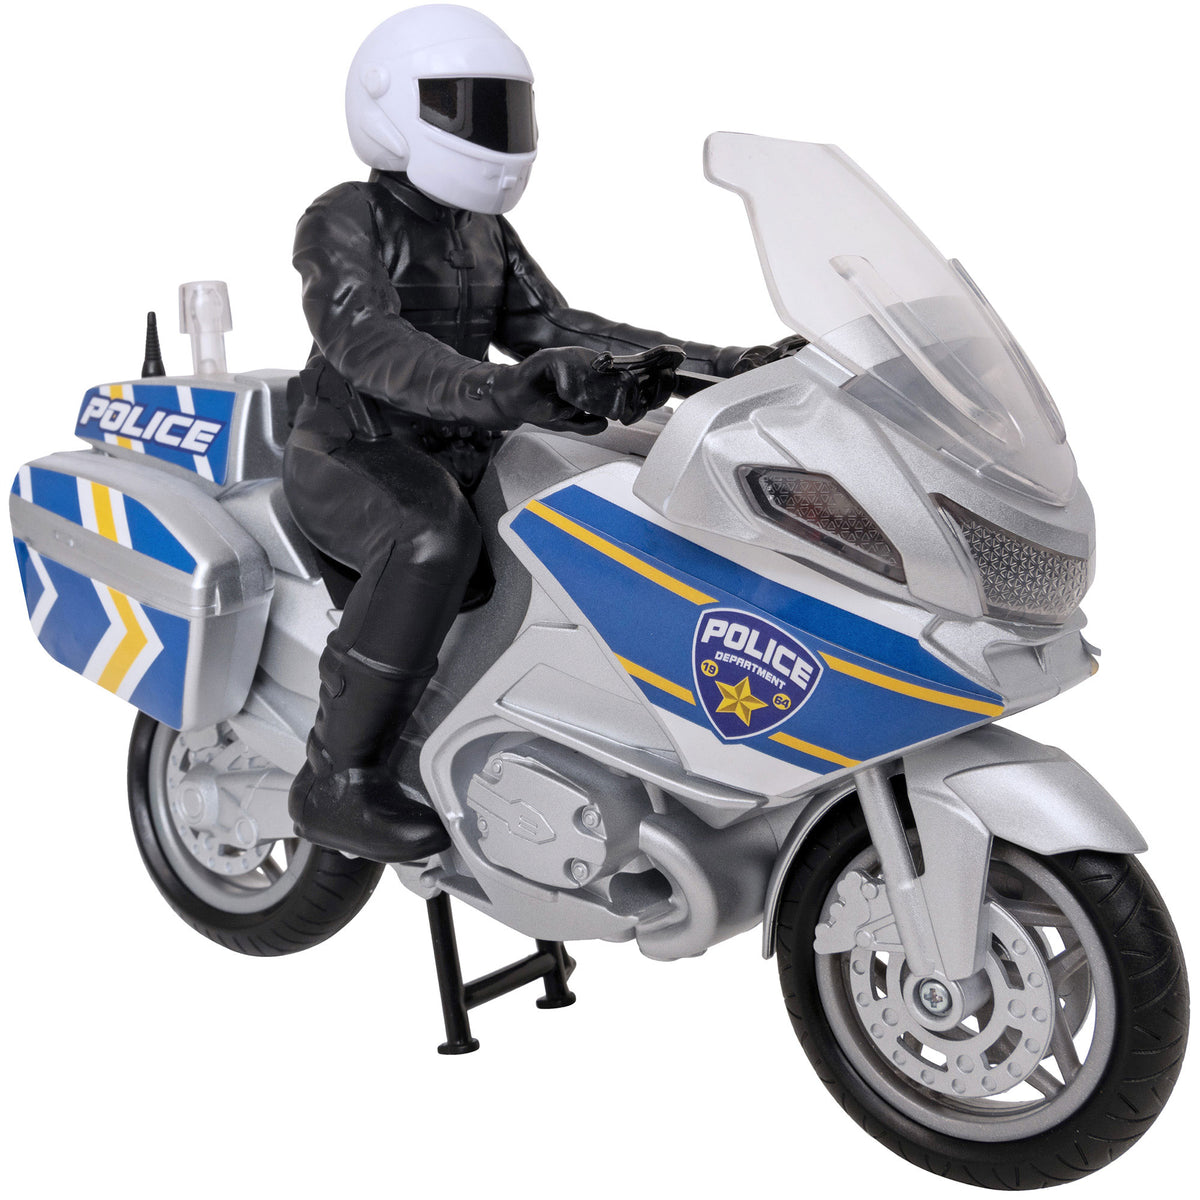 Teamsterz Medium Police Toy Motorbike with Figure